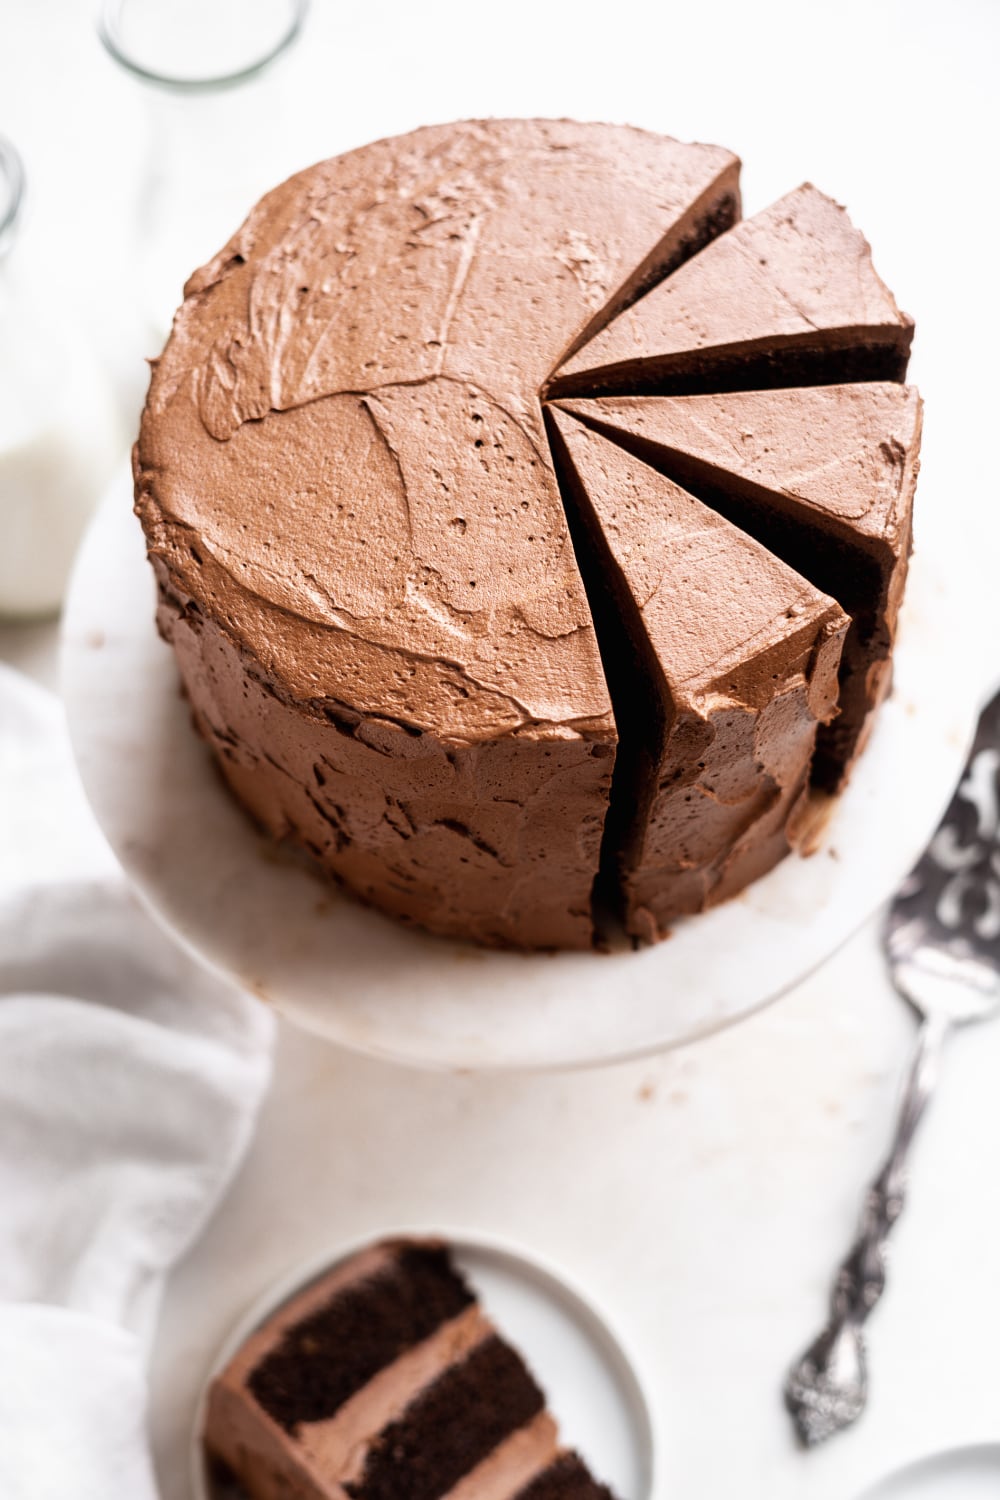 paleo chocolate cake sliced into three slices